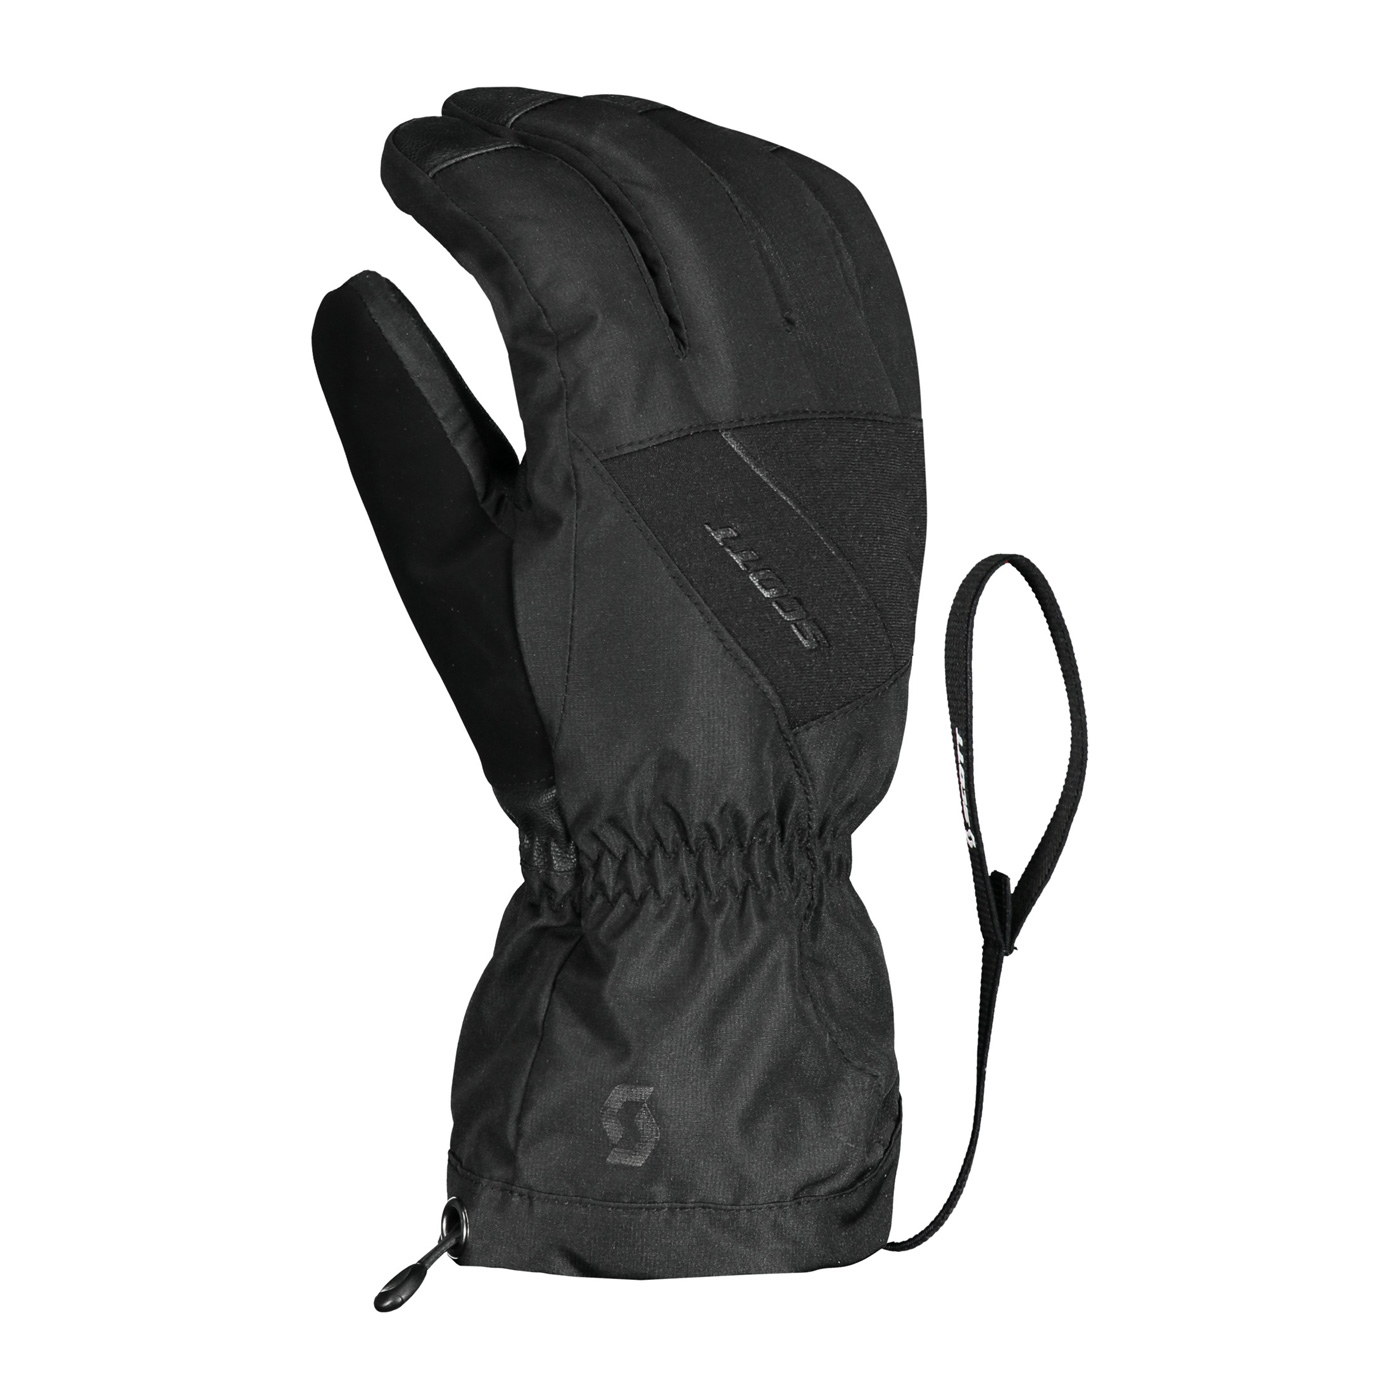 Scott Ultimate GTX Ski Glove- Black - M, BLACK